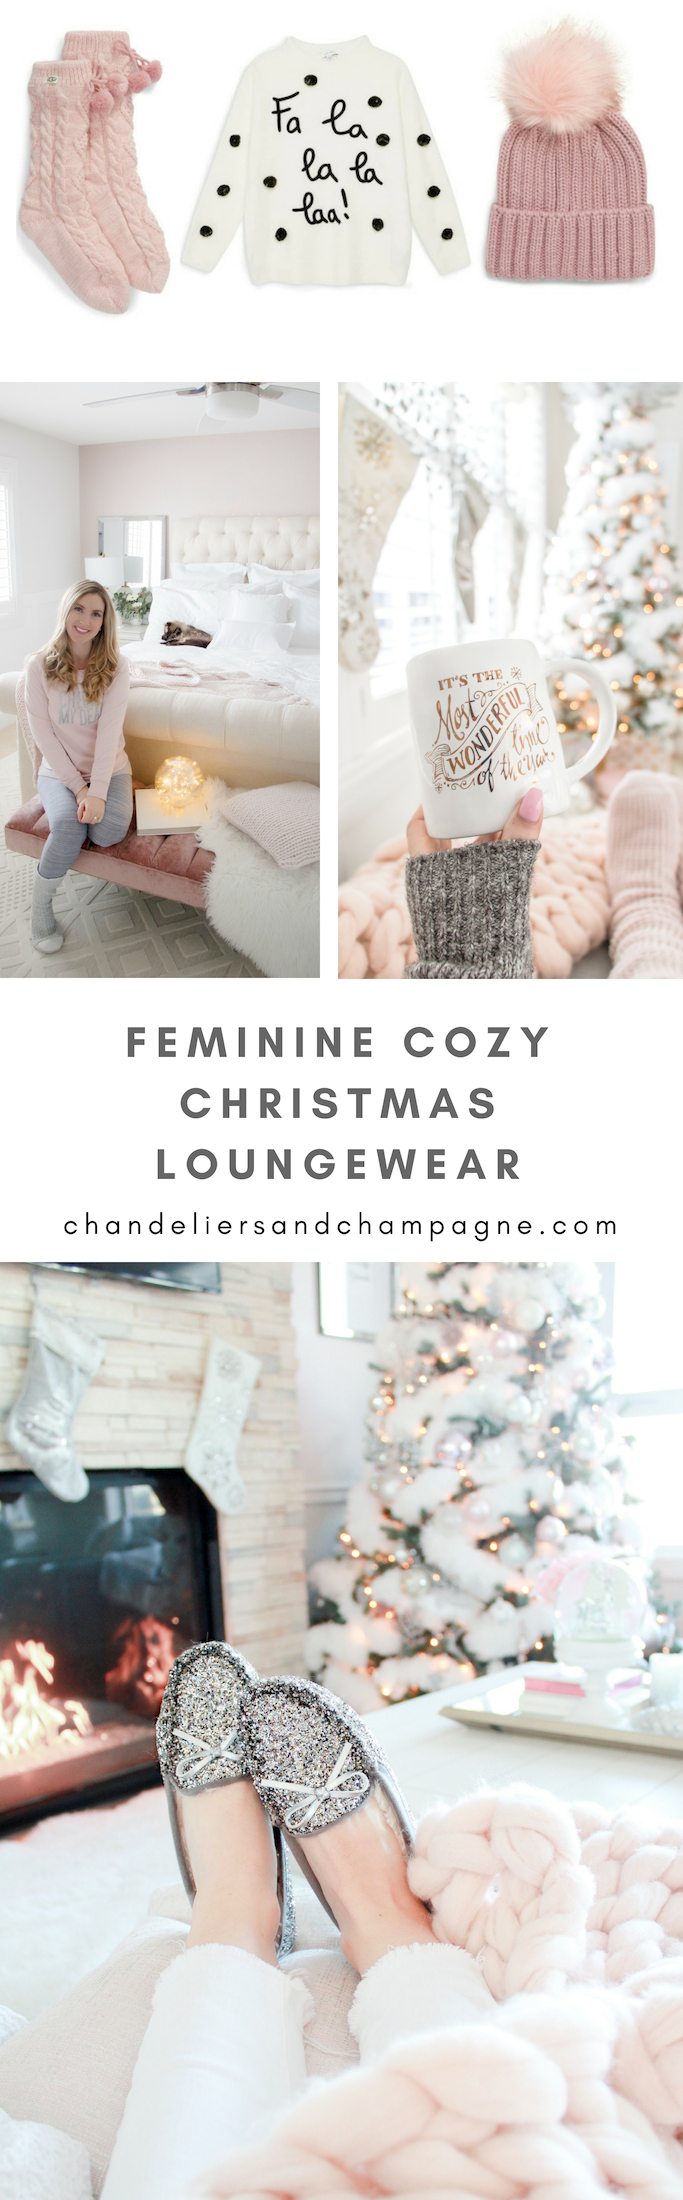 Feminine Cozy Christmas Loungewear, pink loungewear, glitter slippers, pompom slippers, pink cozy Christmas pyjamas, glamorous and feminine loungewear